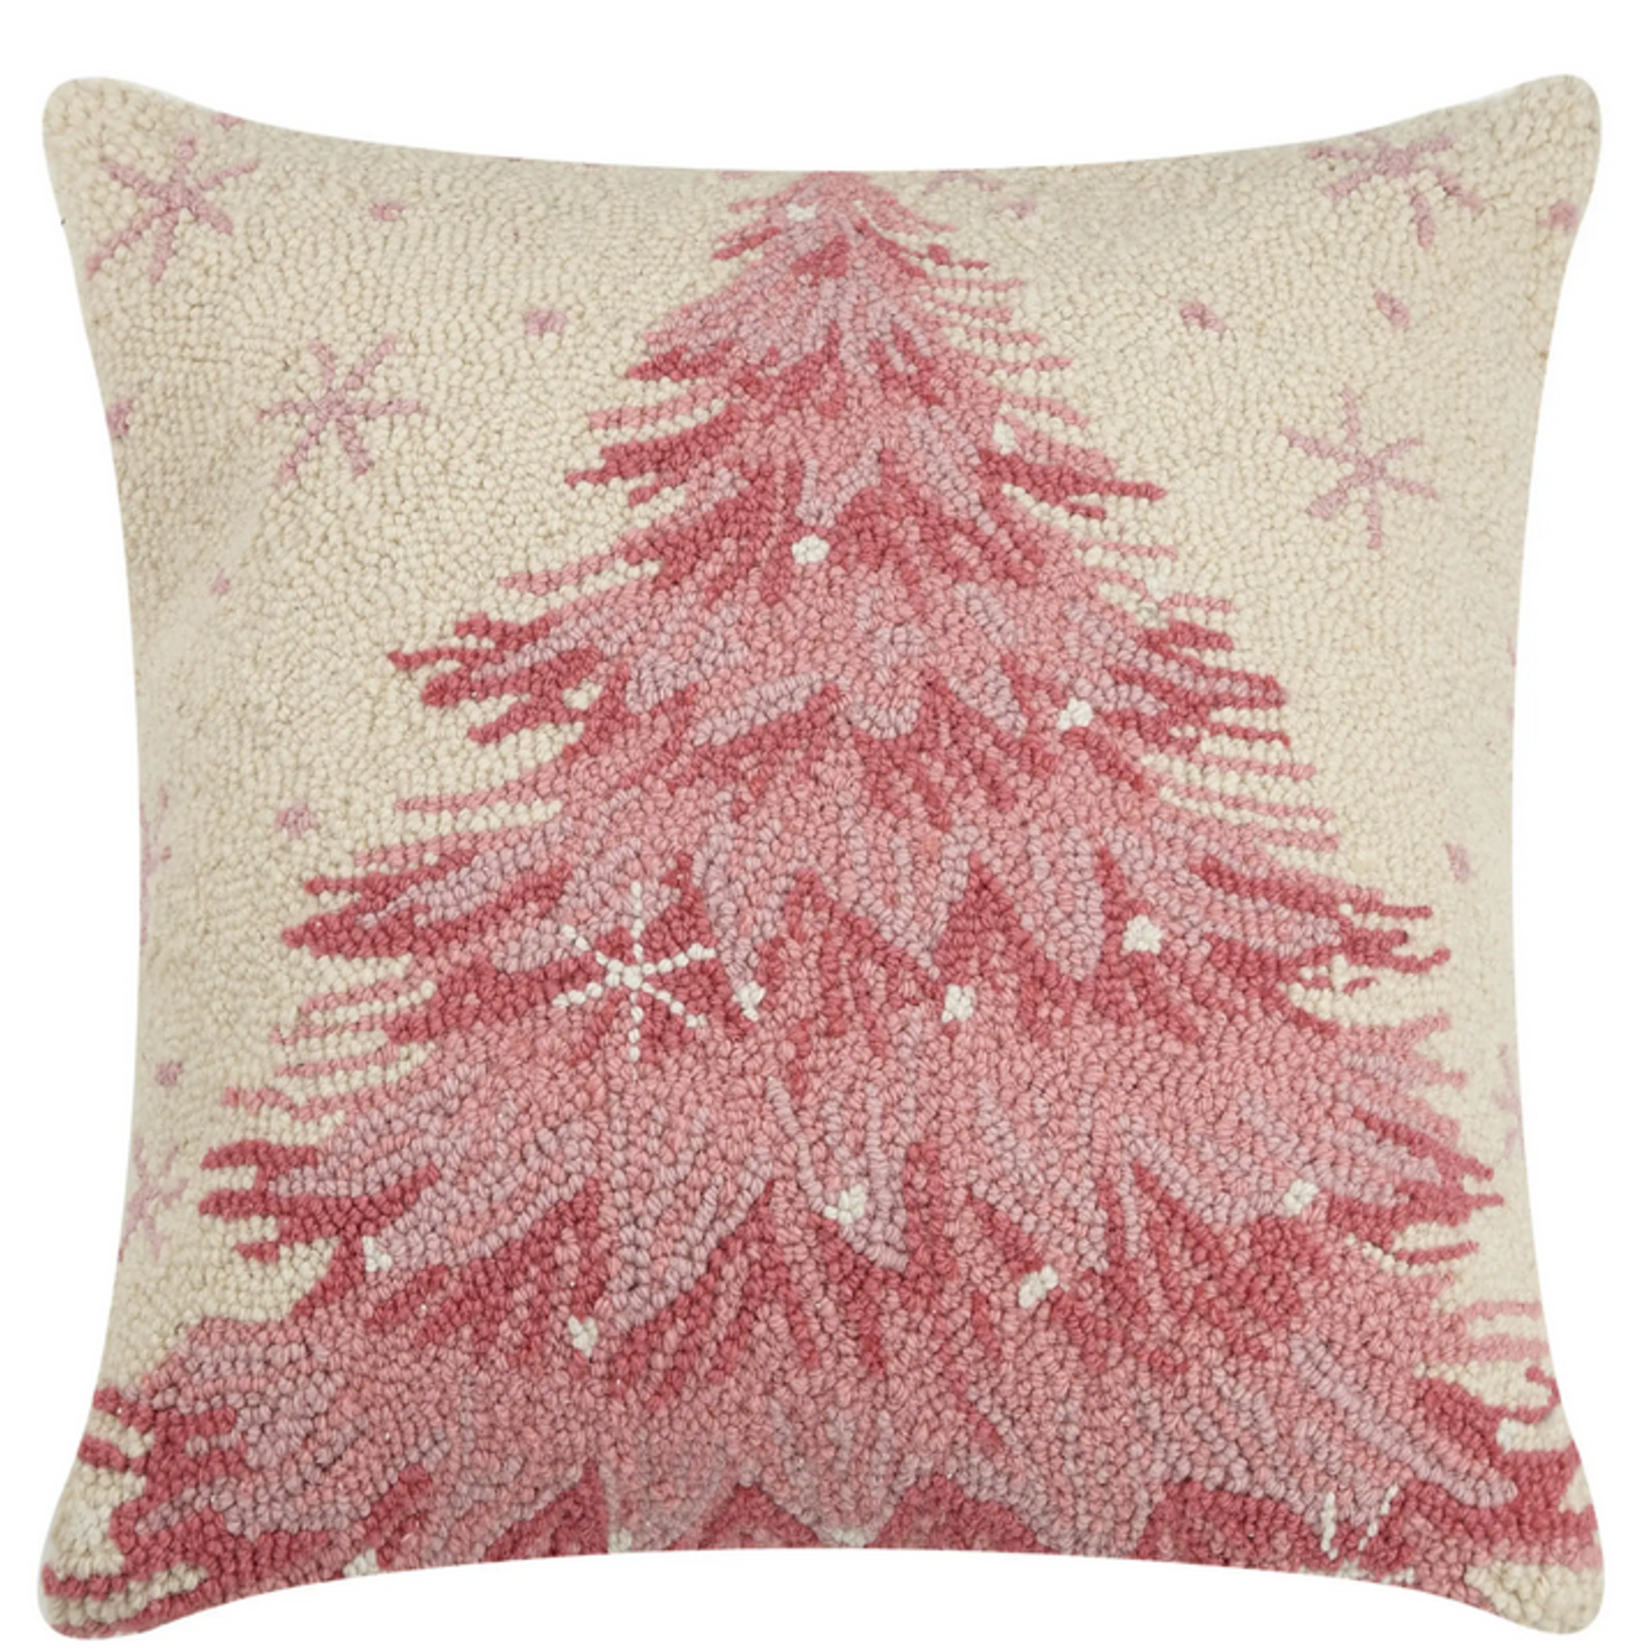 Peking Handicraft Pink Christmas Tree Hook Pillow